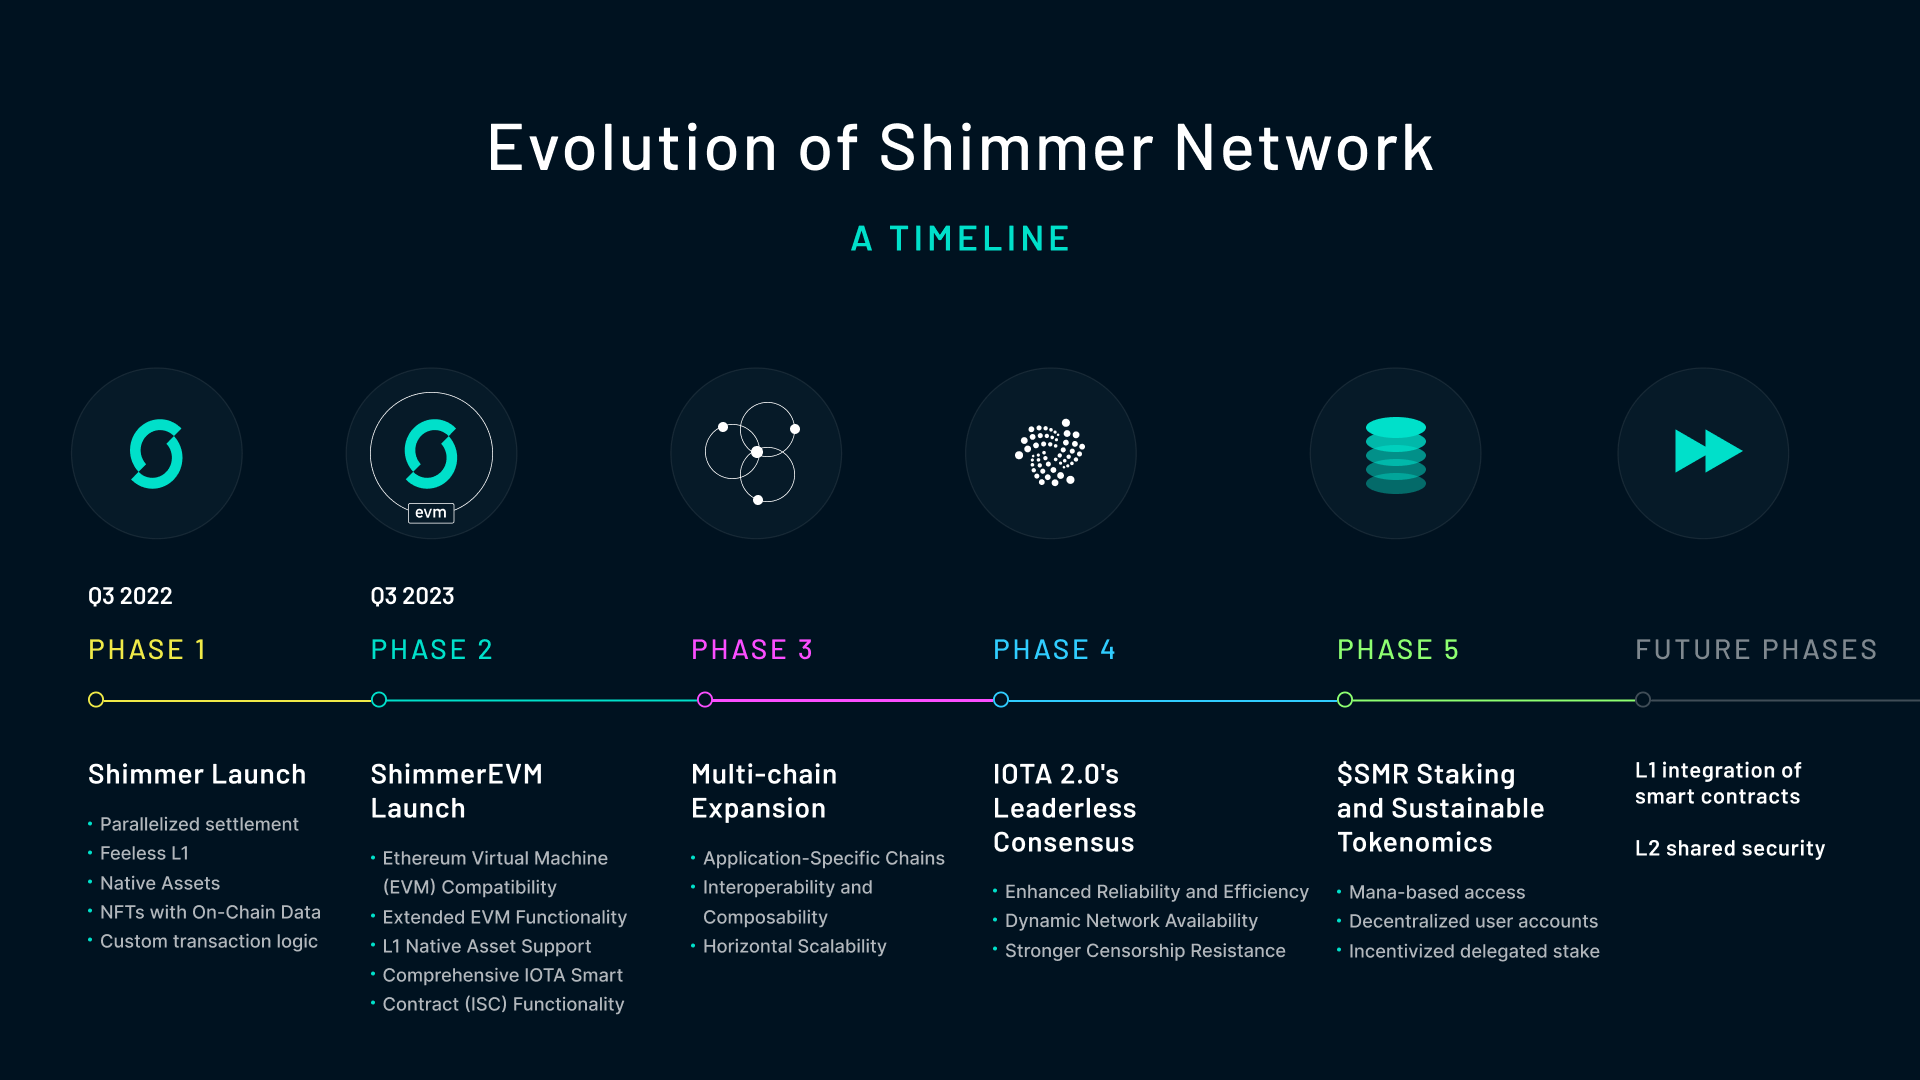 Shimmer's Roadmap and Evolution